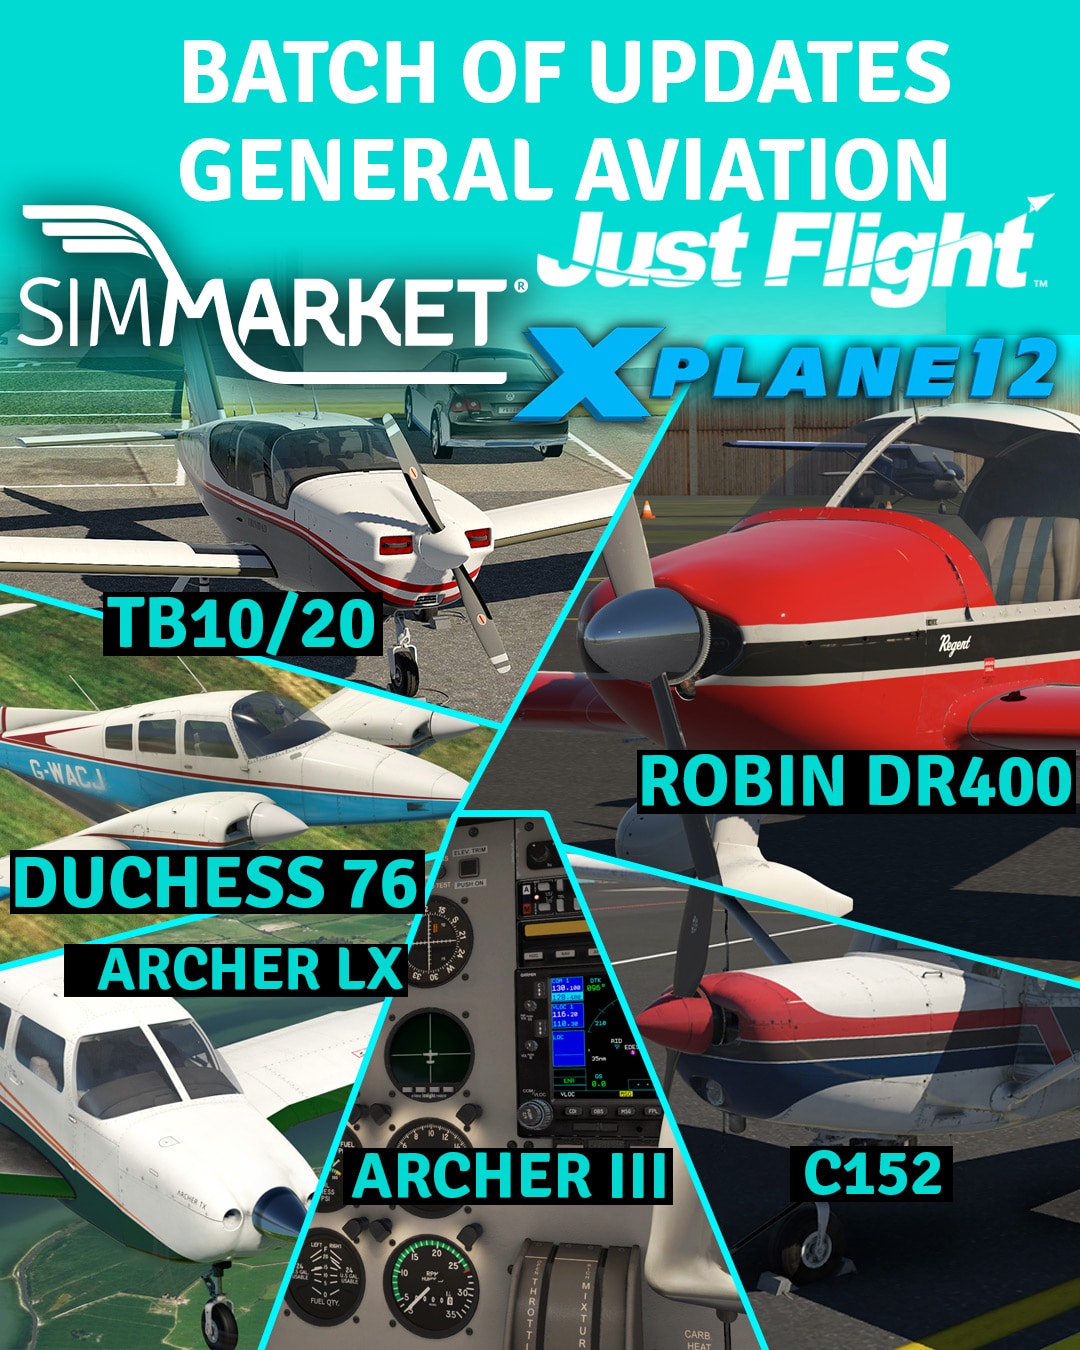 X-Plane vs. Microsoft Flight Simulator: Which Is Better?